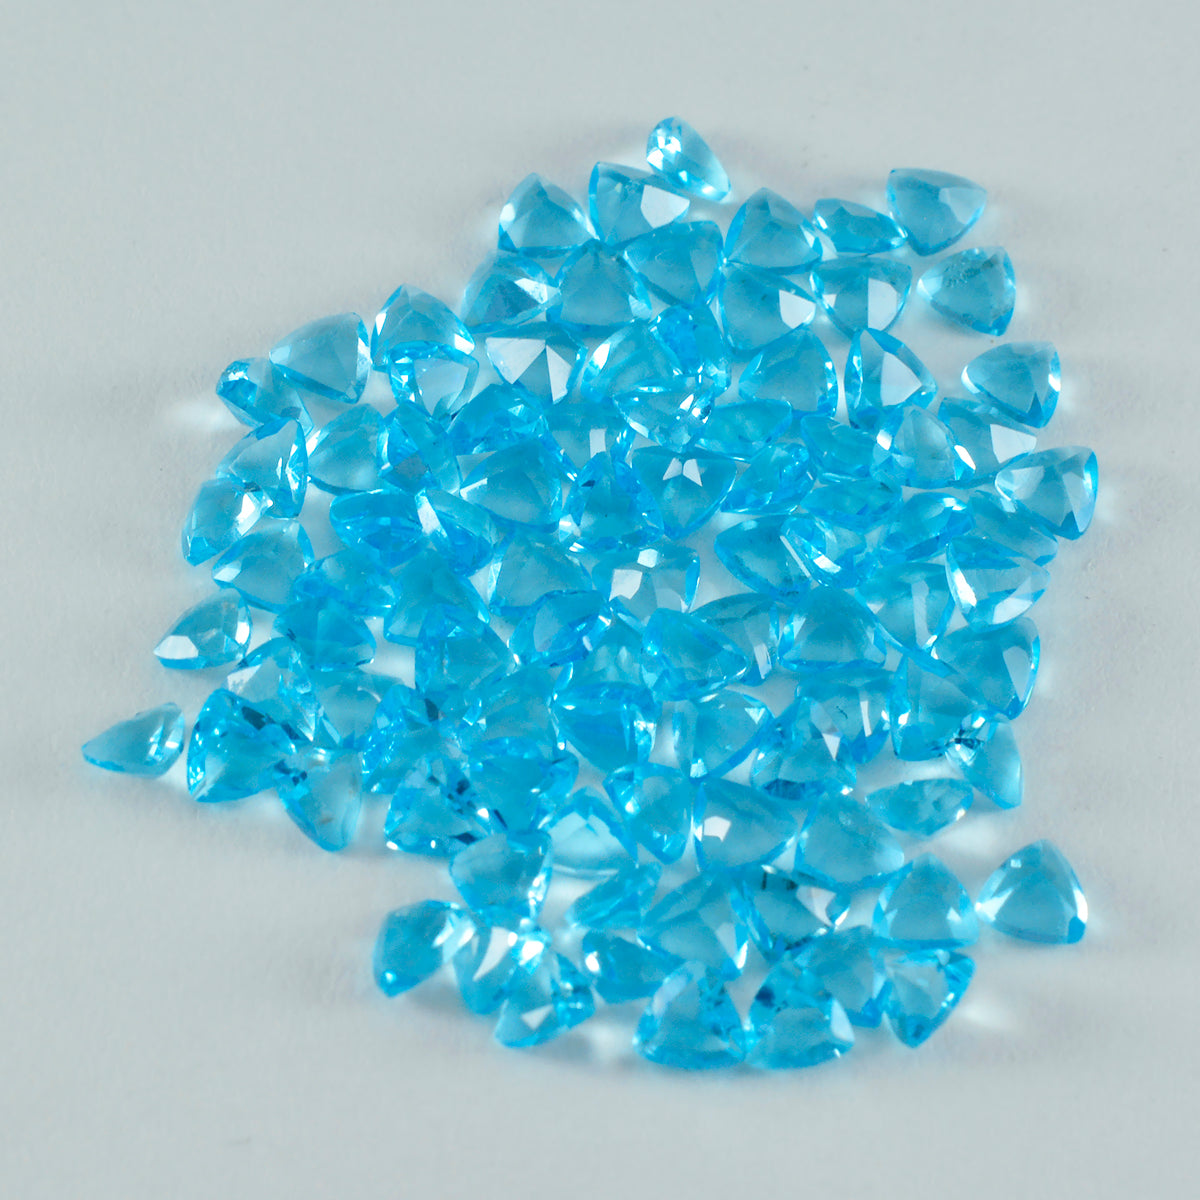 Riyogems 1PC Blue Topaz CZ Faceted 4x4 mm Trillion Shape great Quality Gemstone